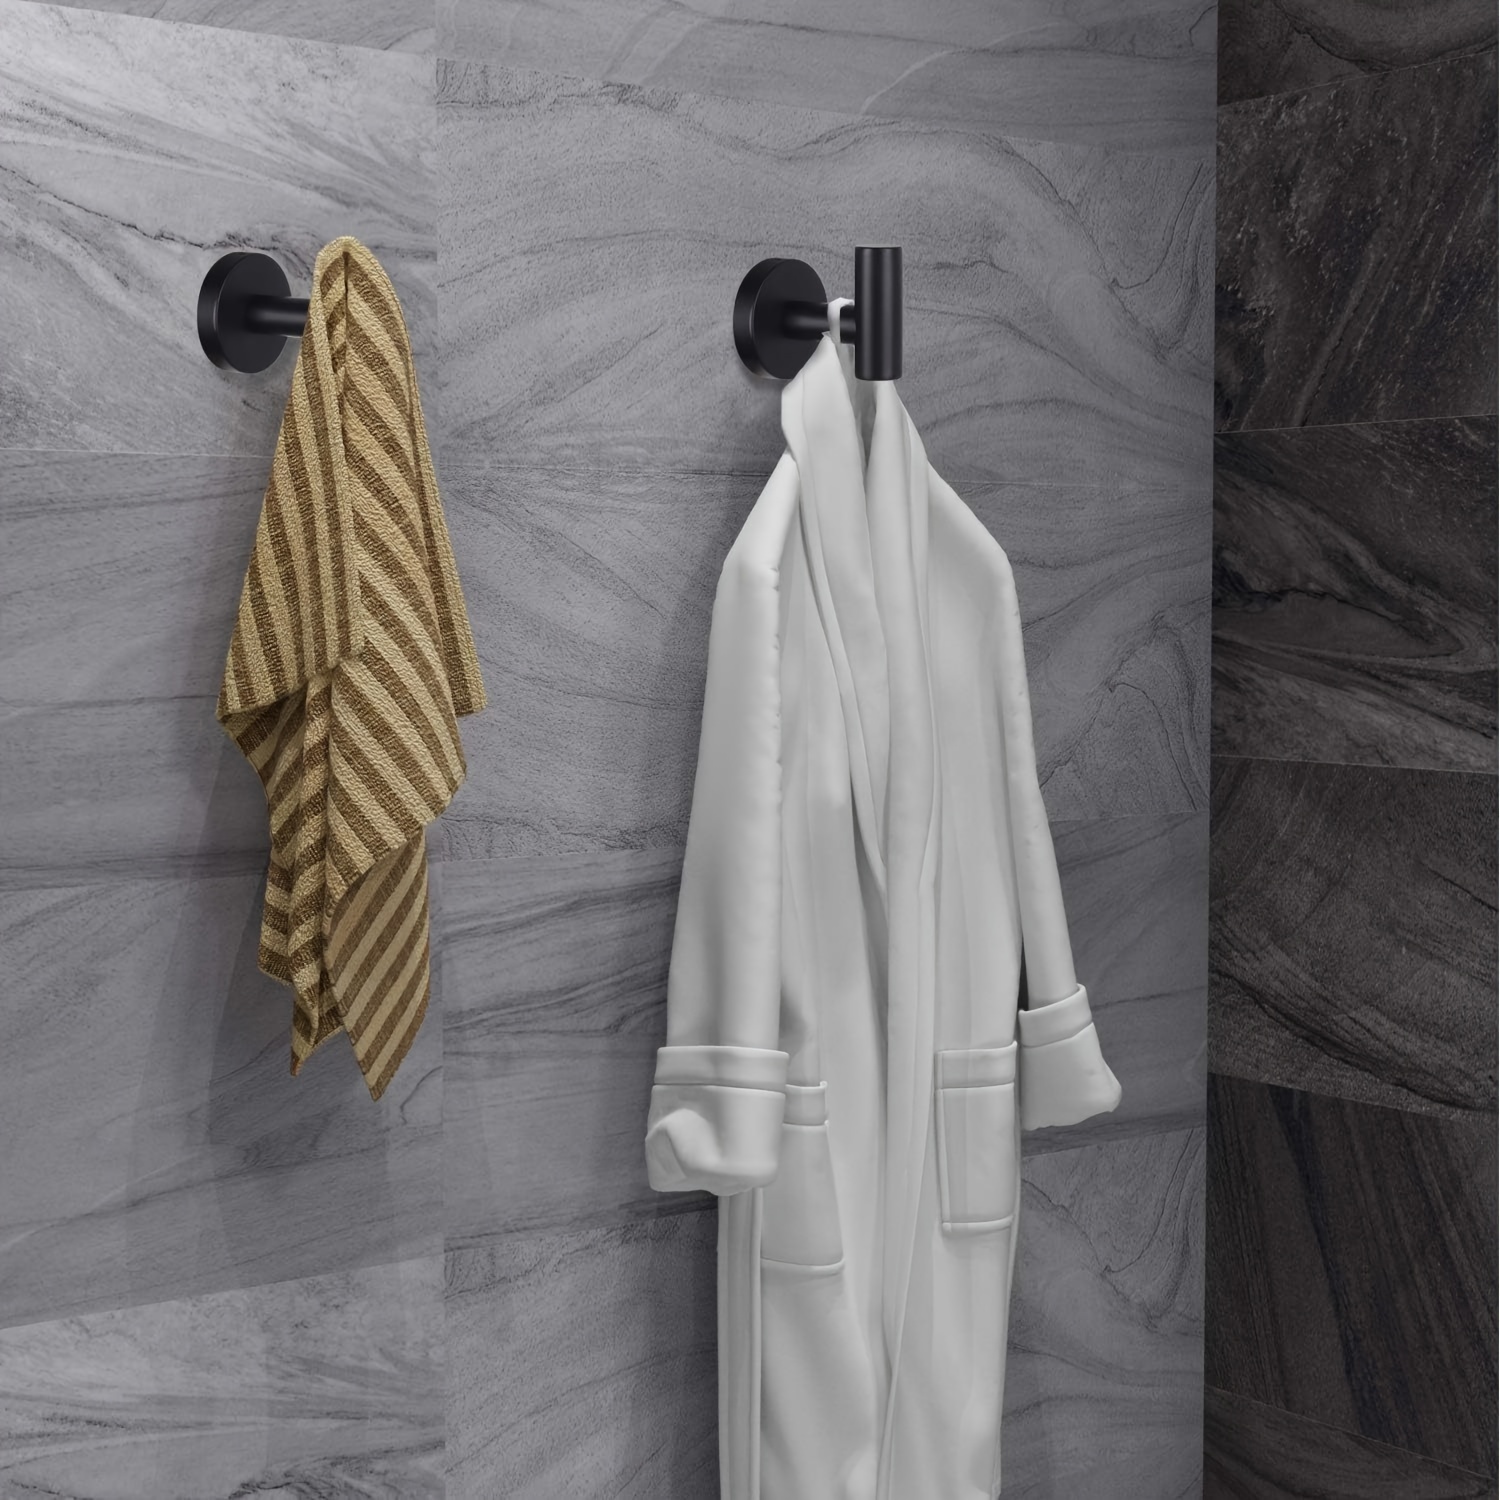 Riapawel 40Pcs Robe Coat Hooks,Metal Door&Wall Mounted Coat Hook Hanger  with 80Pcs Screws,for Hanging Clothes,Robe,Towel,Hat,Key 